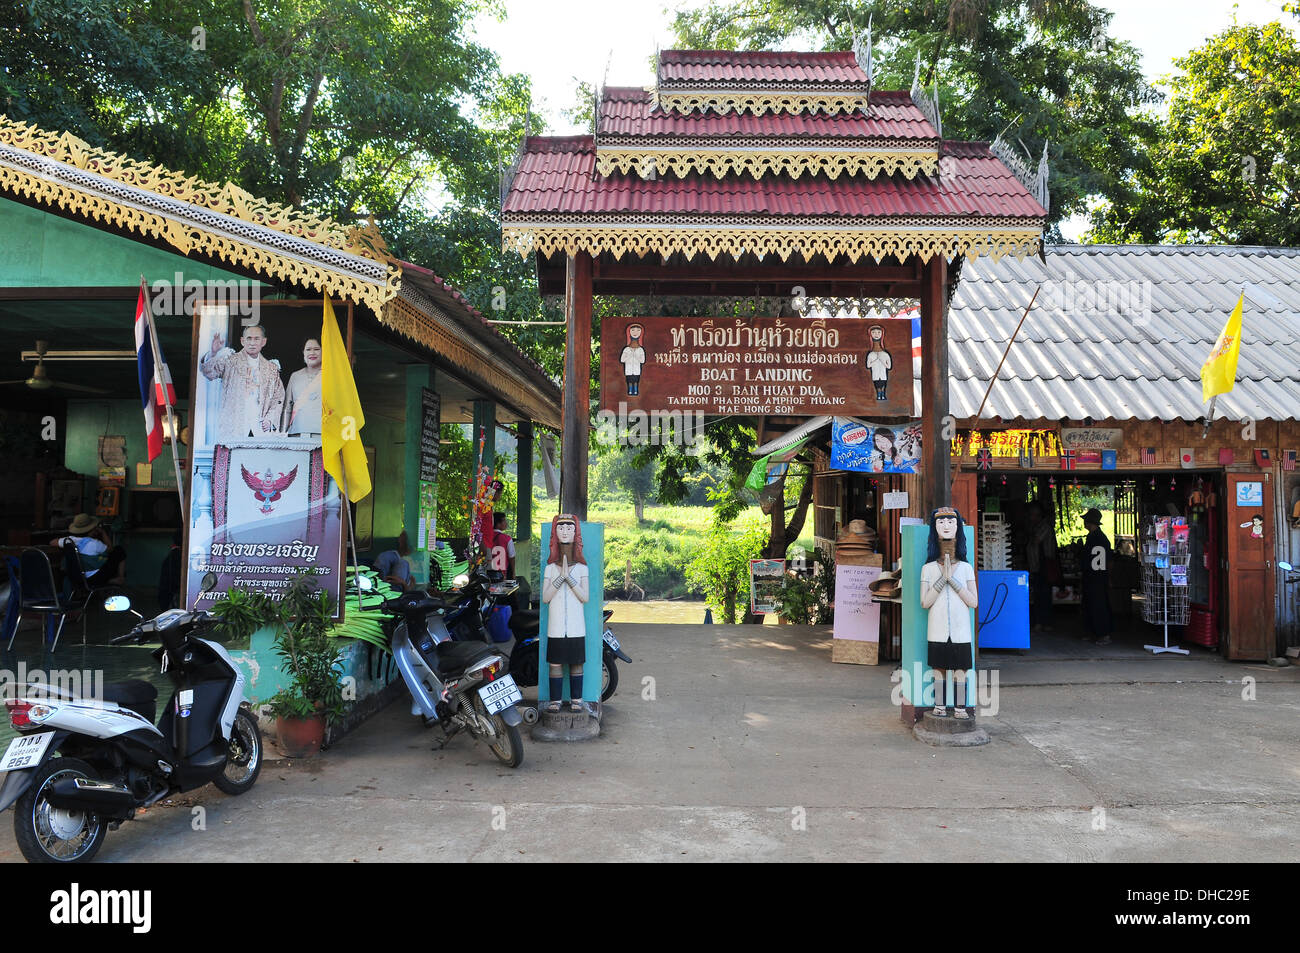 Bergstämme in Thailand – Tor zum Long Neck Karen Dorf (Mae Hong Son) Stockfoto